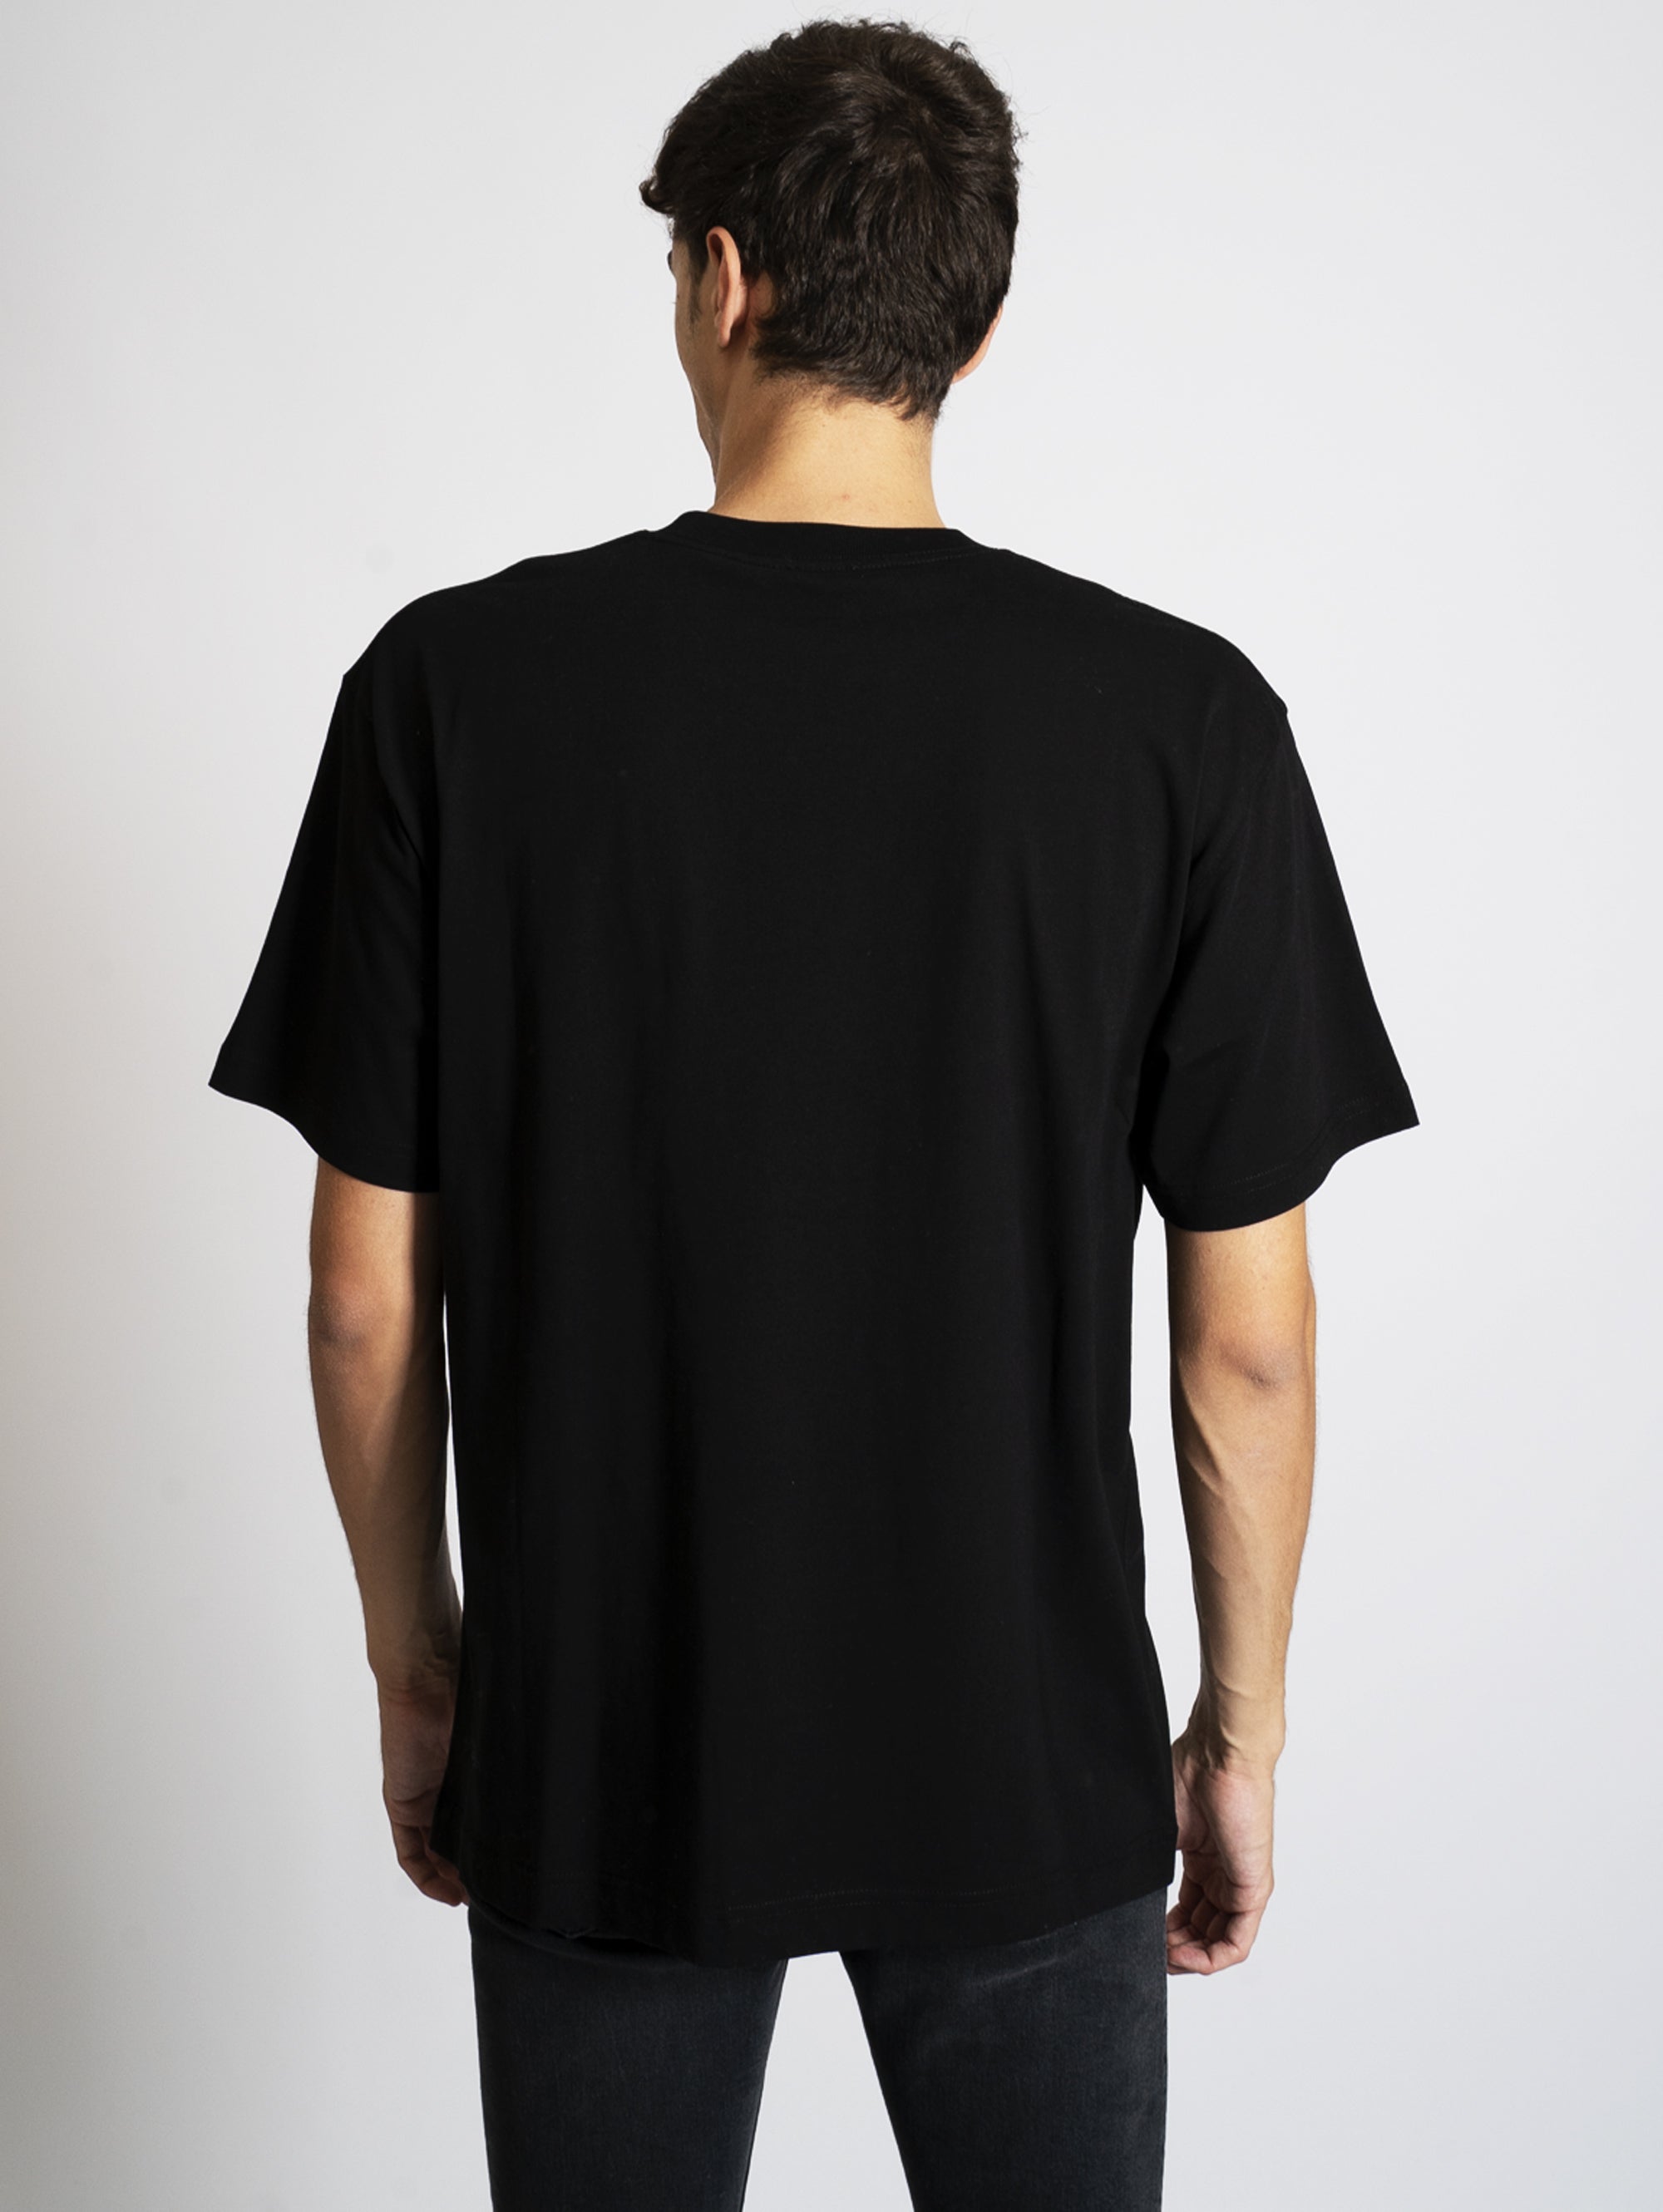 T-shirt with Black Print